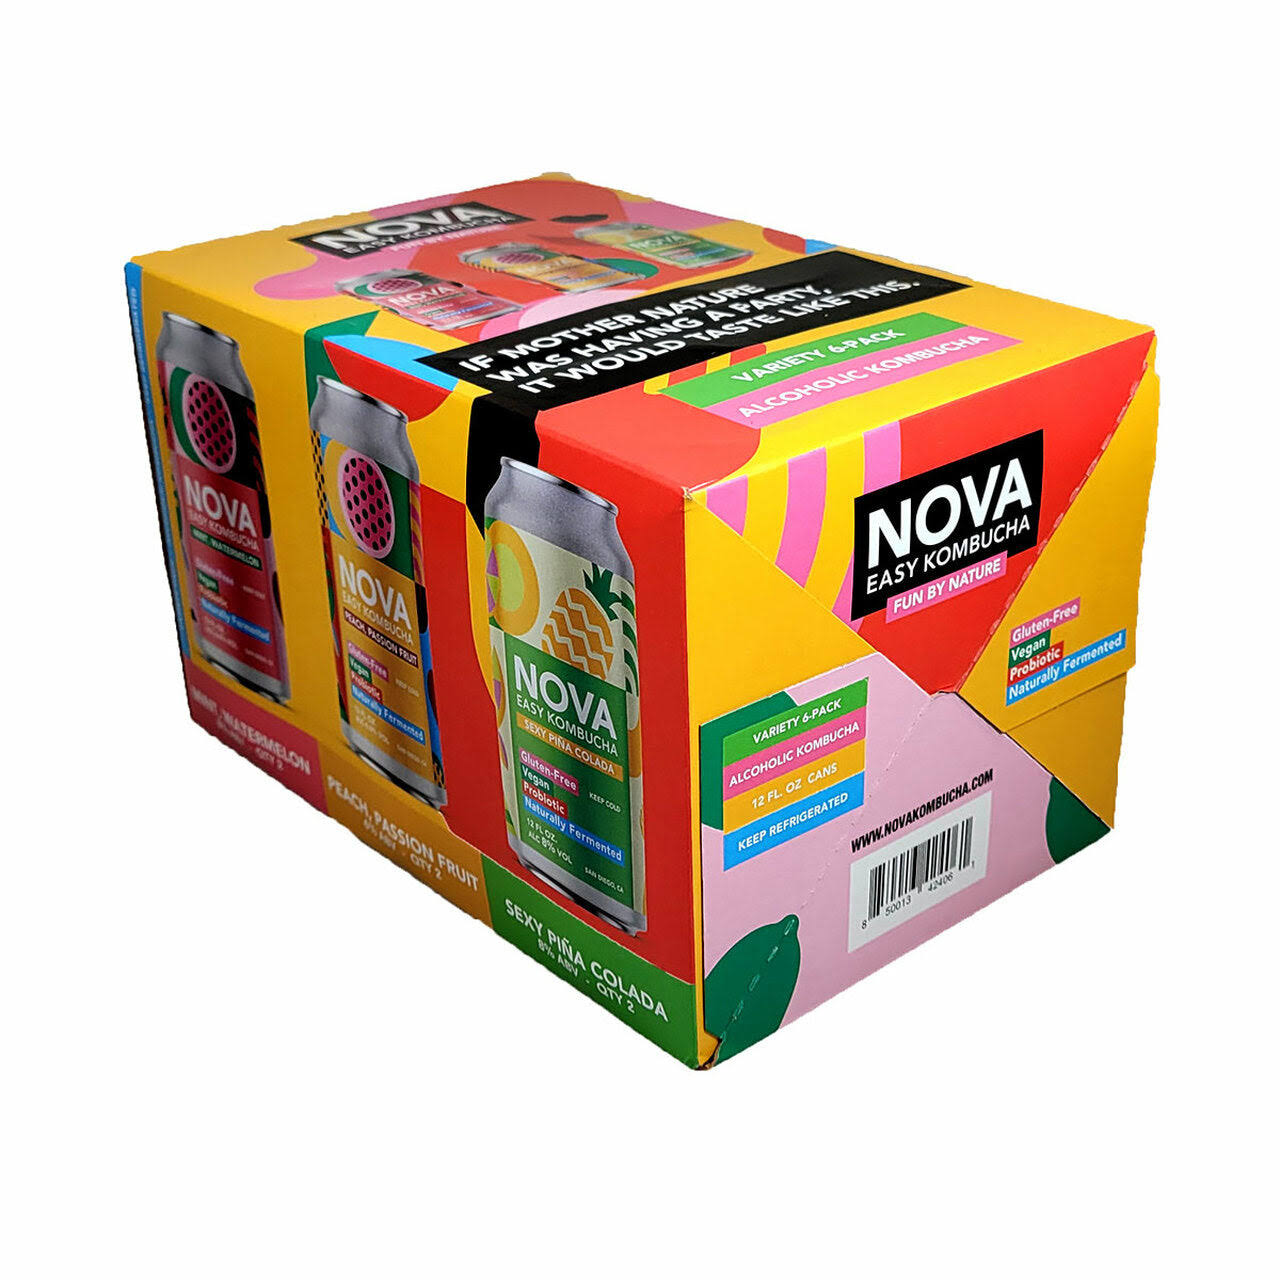 Nova Kombucha, Easy, Alcoholic, 6 Party Pack - 6 pack, 12 fl oz cans